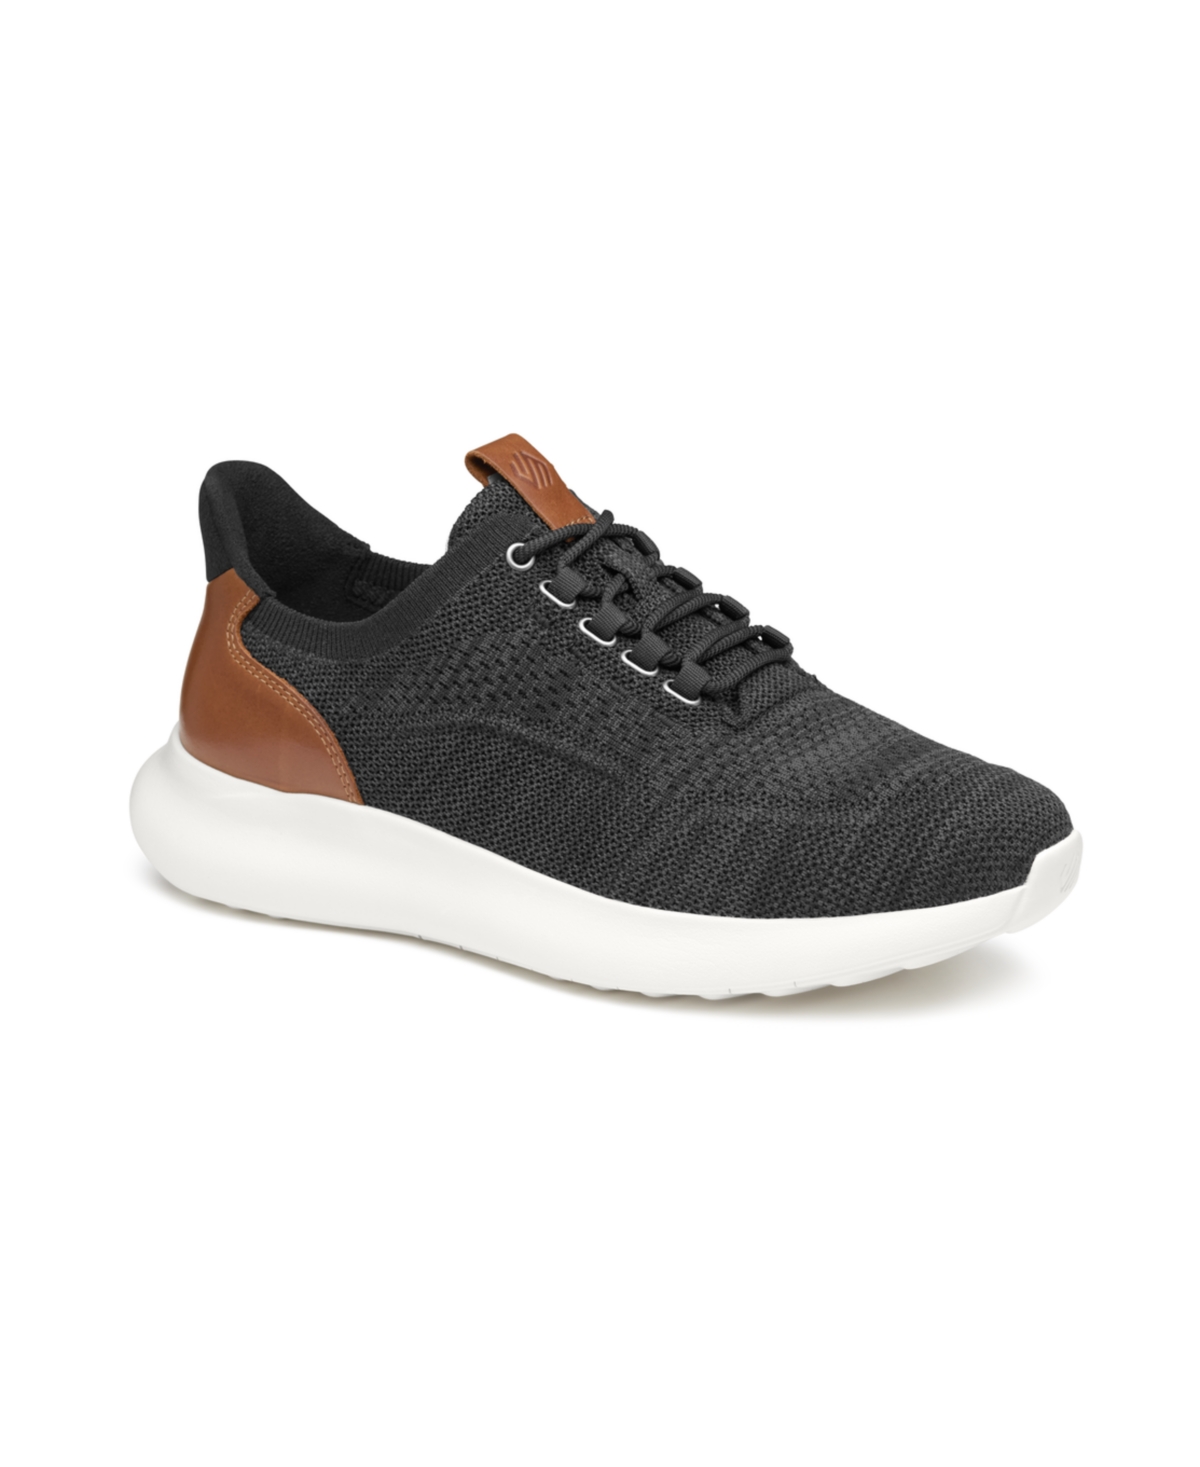 Men's Amherst 2.0 Knit Plain Toe Sneakers - Black